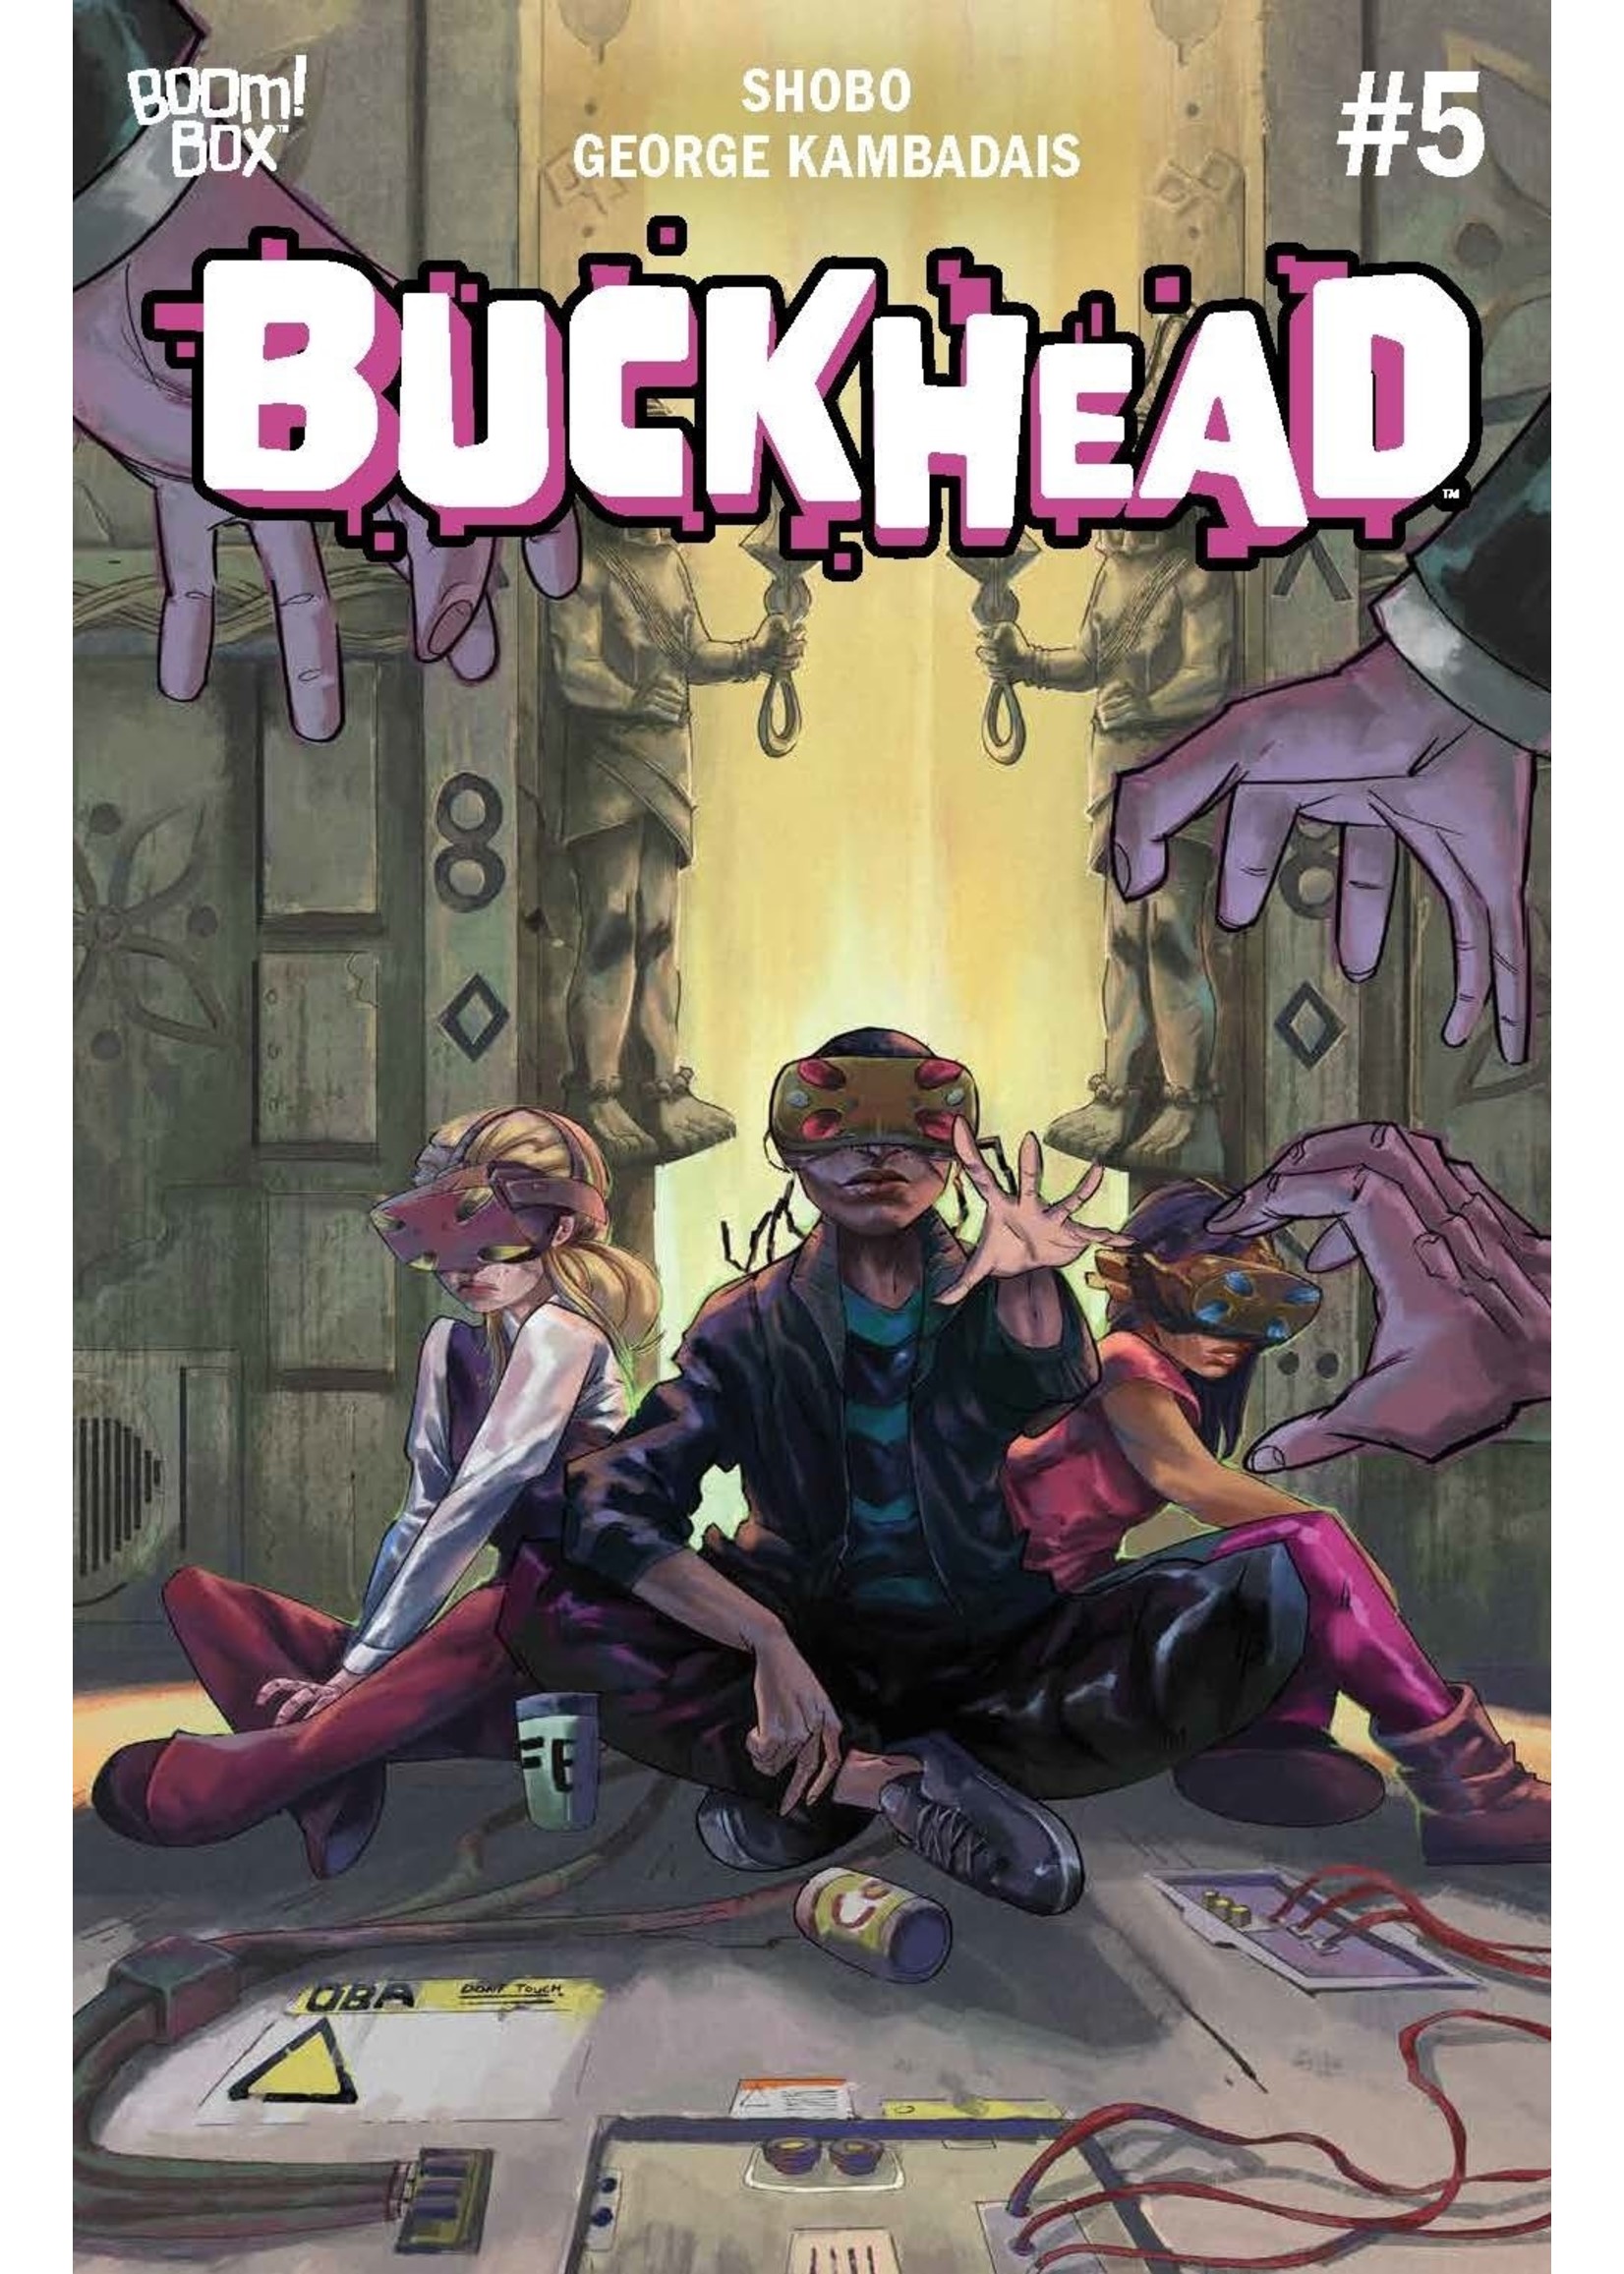 Buckhead #5